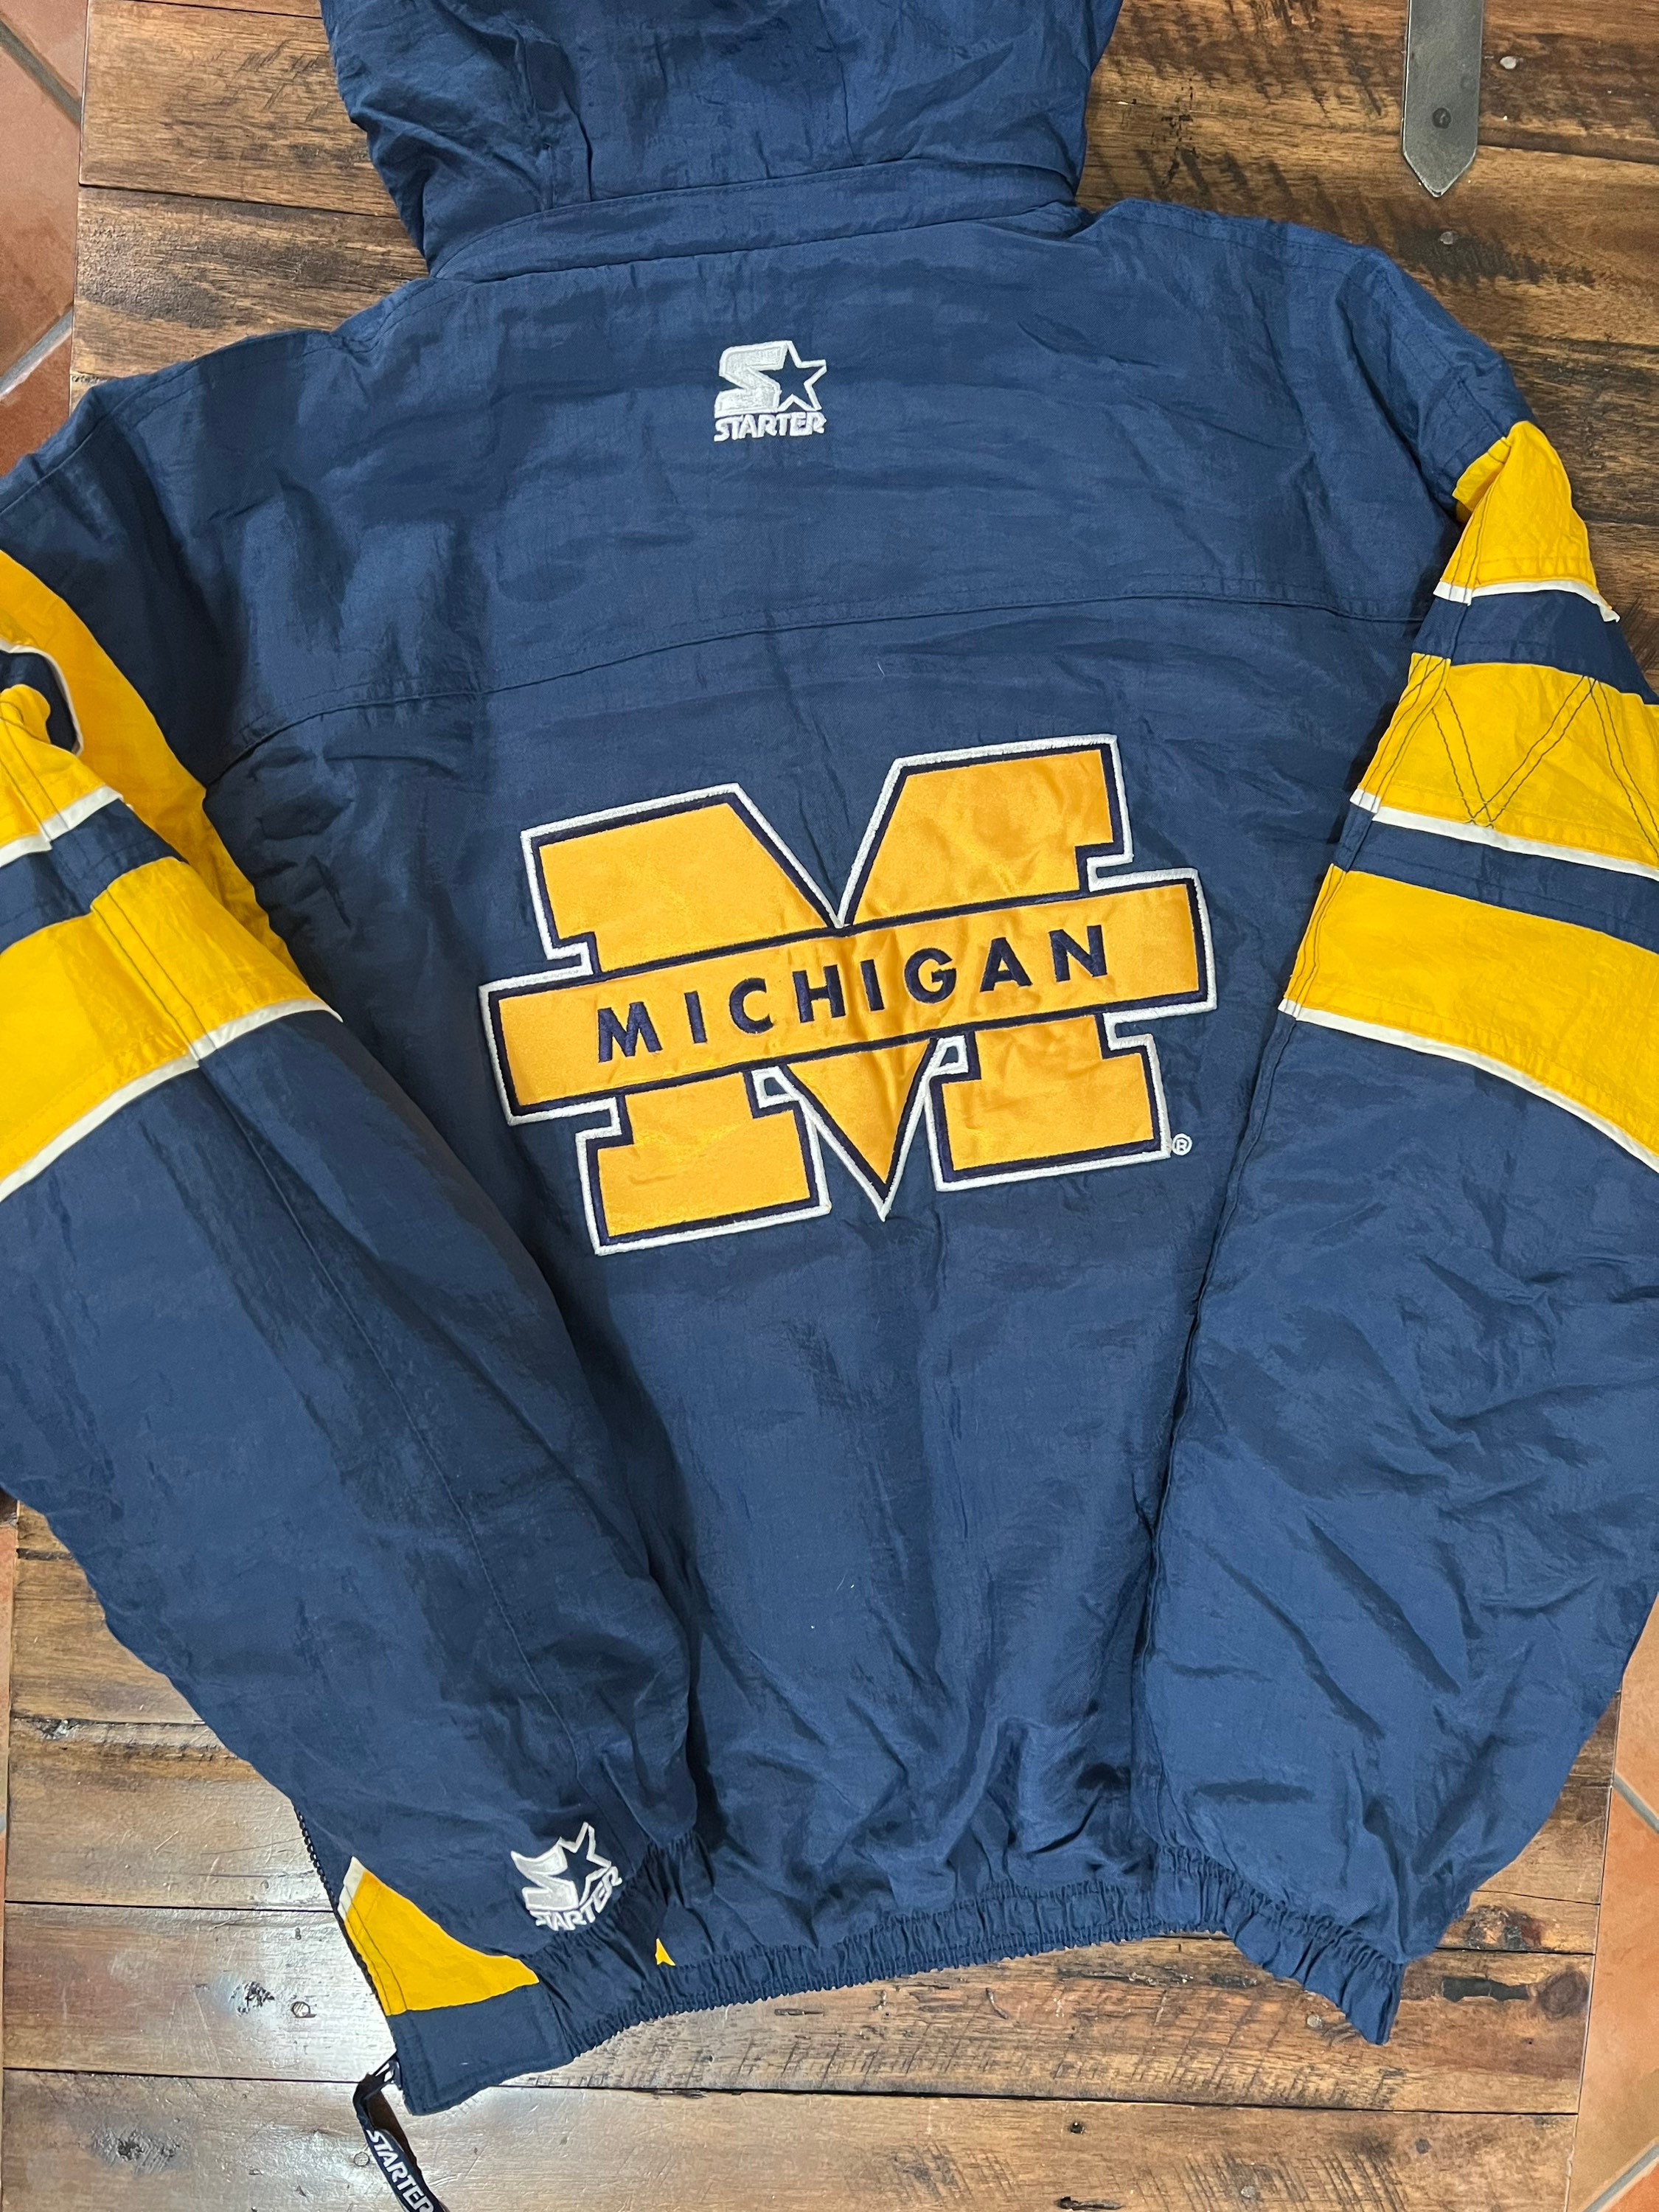 Vintage University of Michigan Starter Jacket in 2023